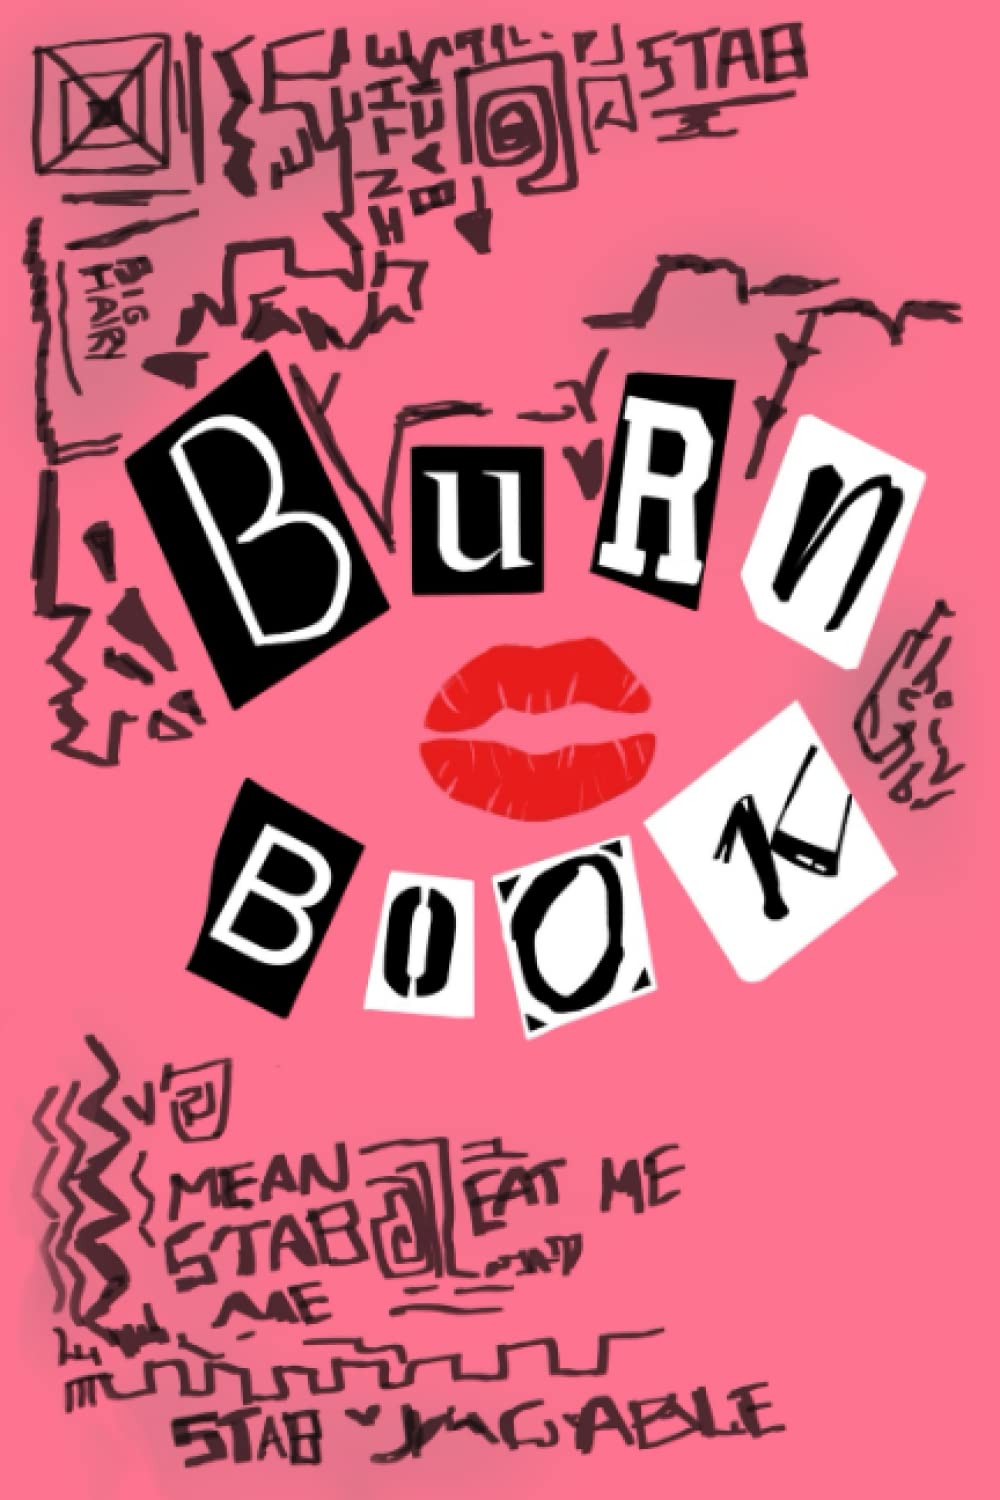 Scrapbook Journal Ideas Mean Girls Aesthetic Mean Girls Burn Book | My ...